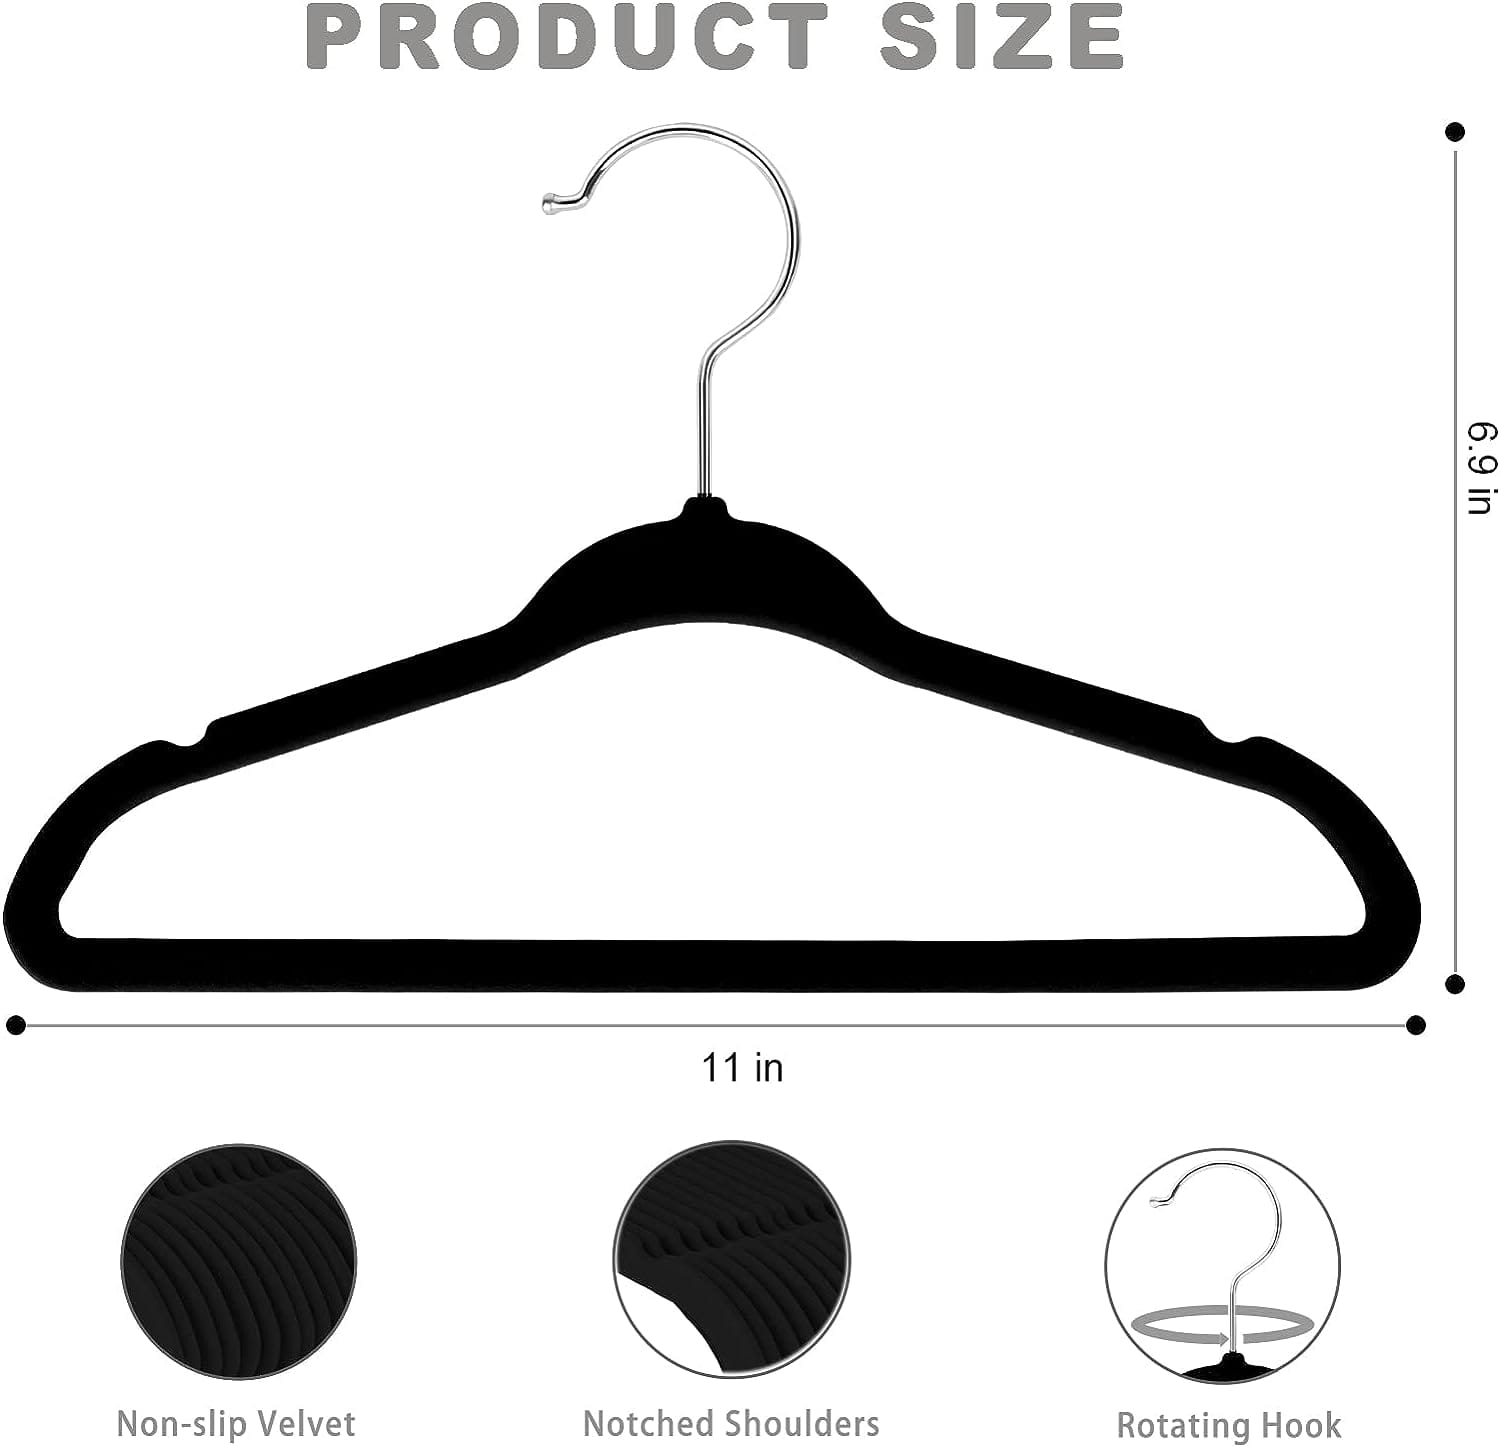 International Hanger Kids Clear Plastic Top Hanger W/ Notches (10